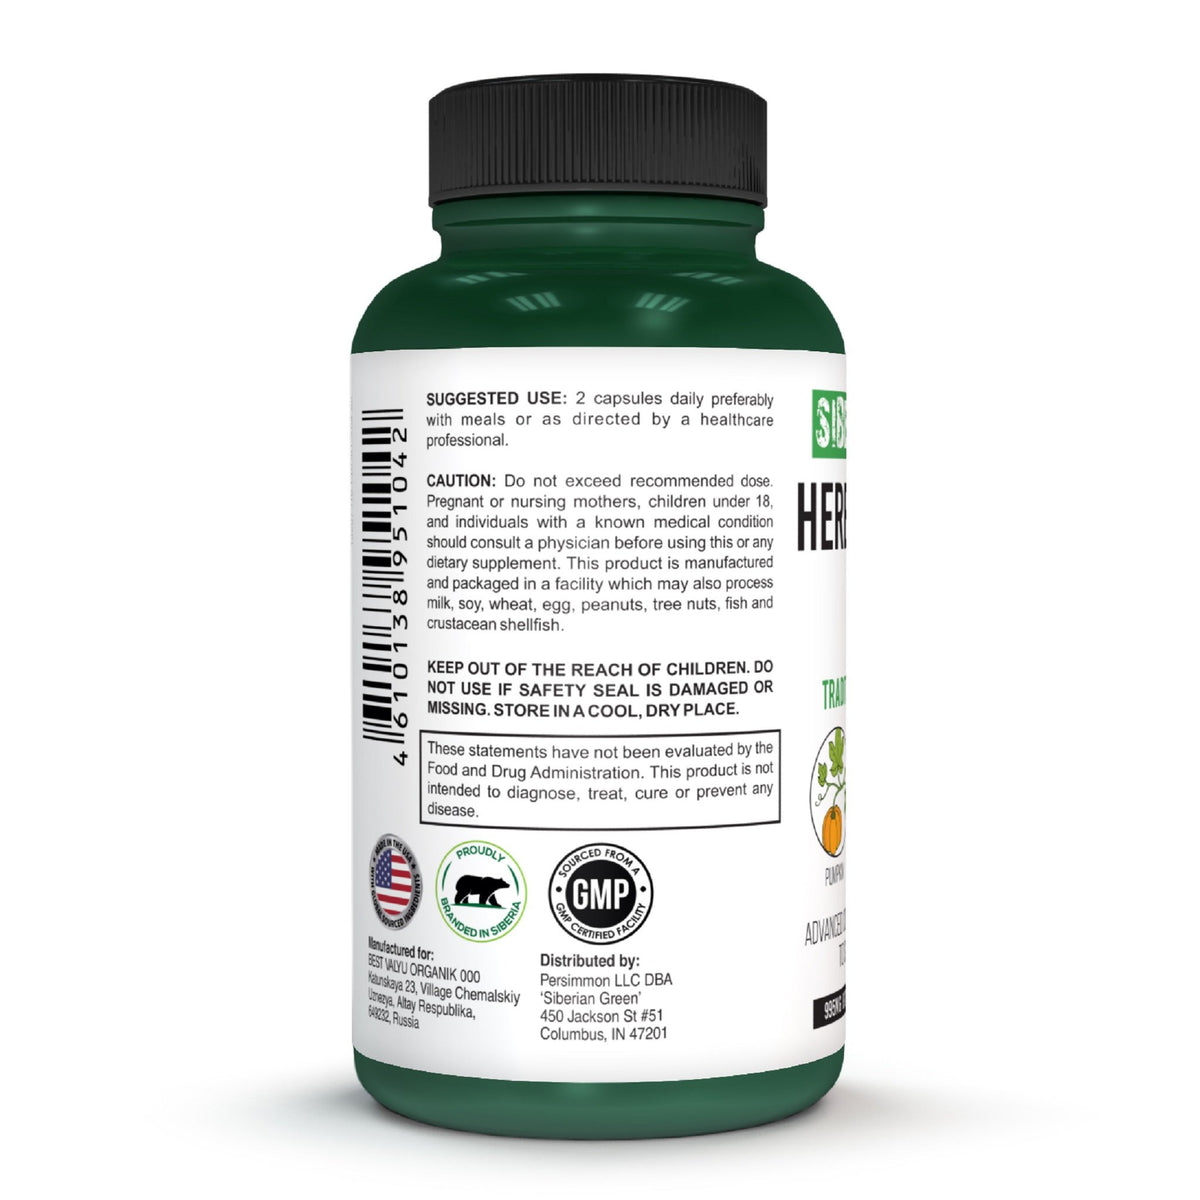 Herbal Prostate Detox Siberian Green 60 Caps – Saw Palmetto Burdock Pumpkin